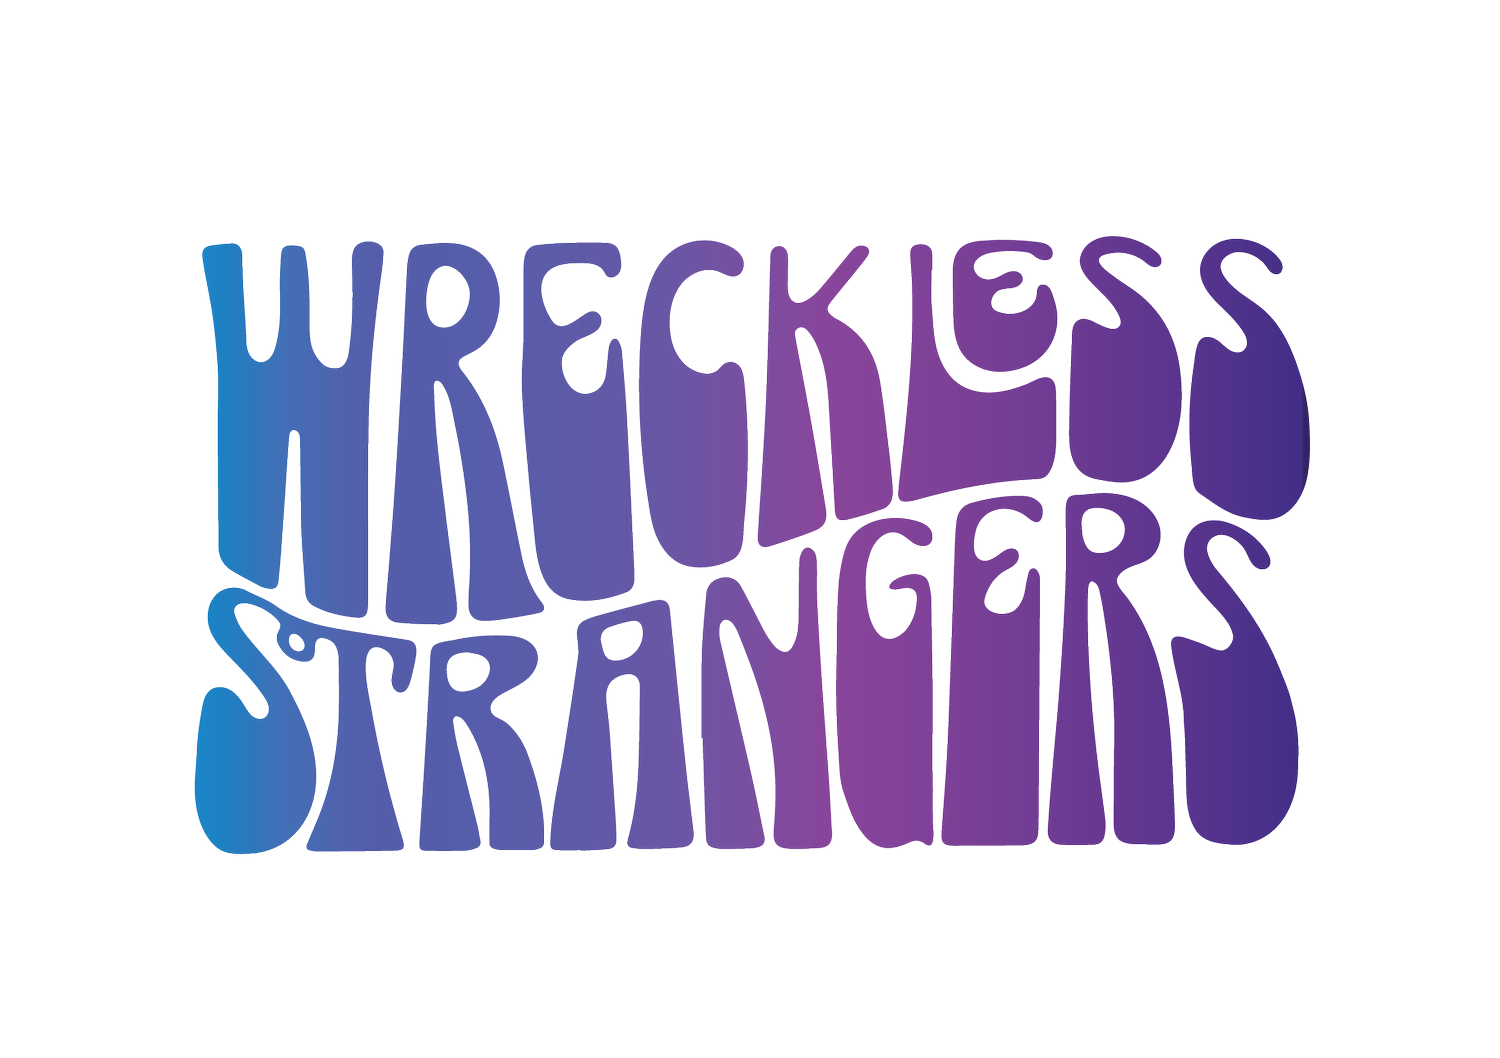 Wreckless Strangers